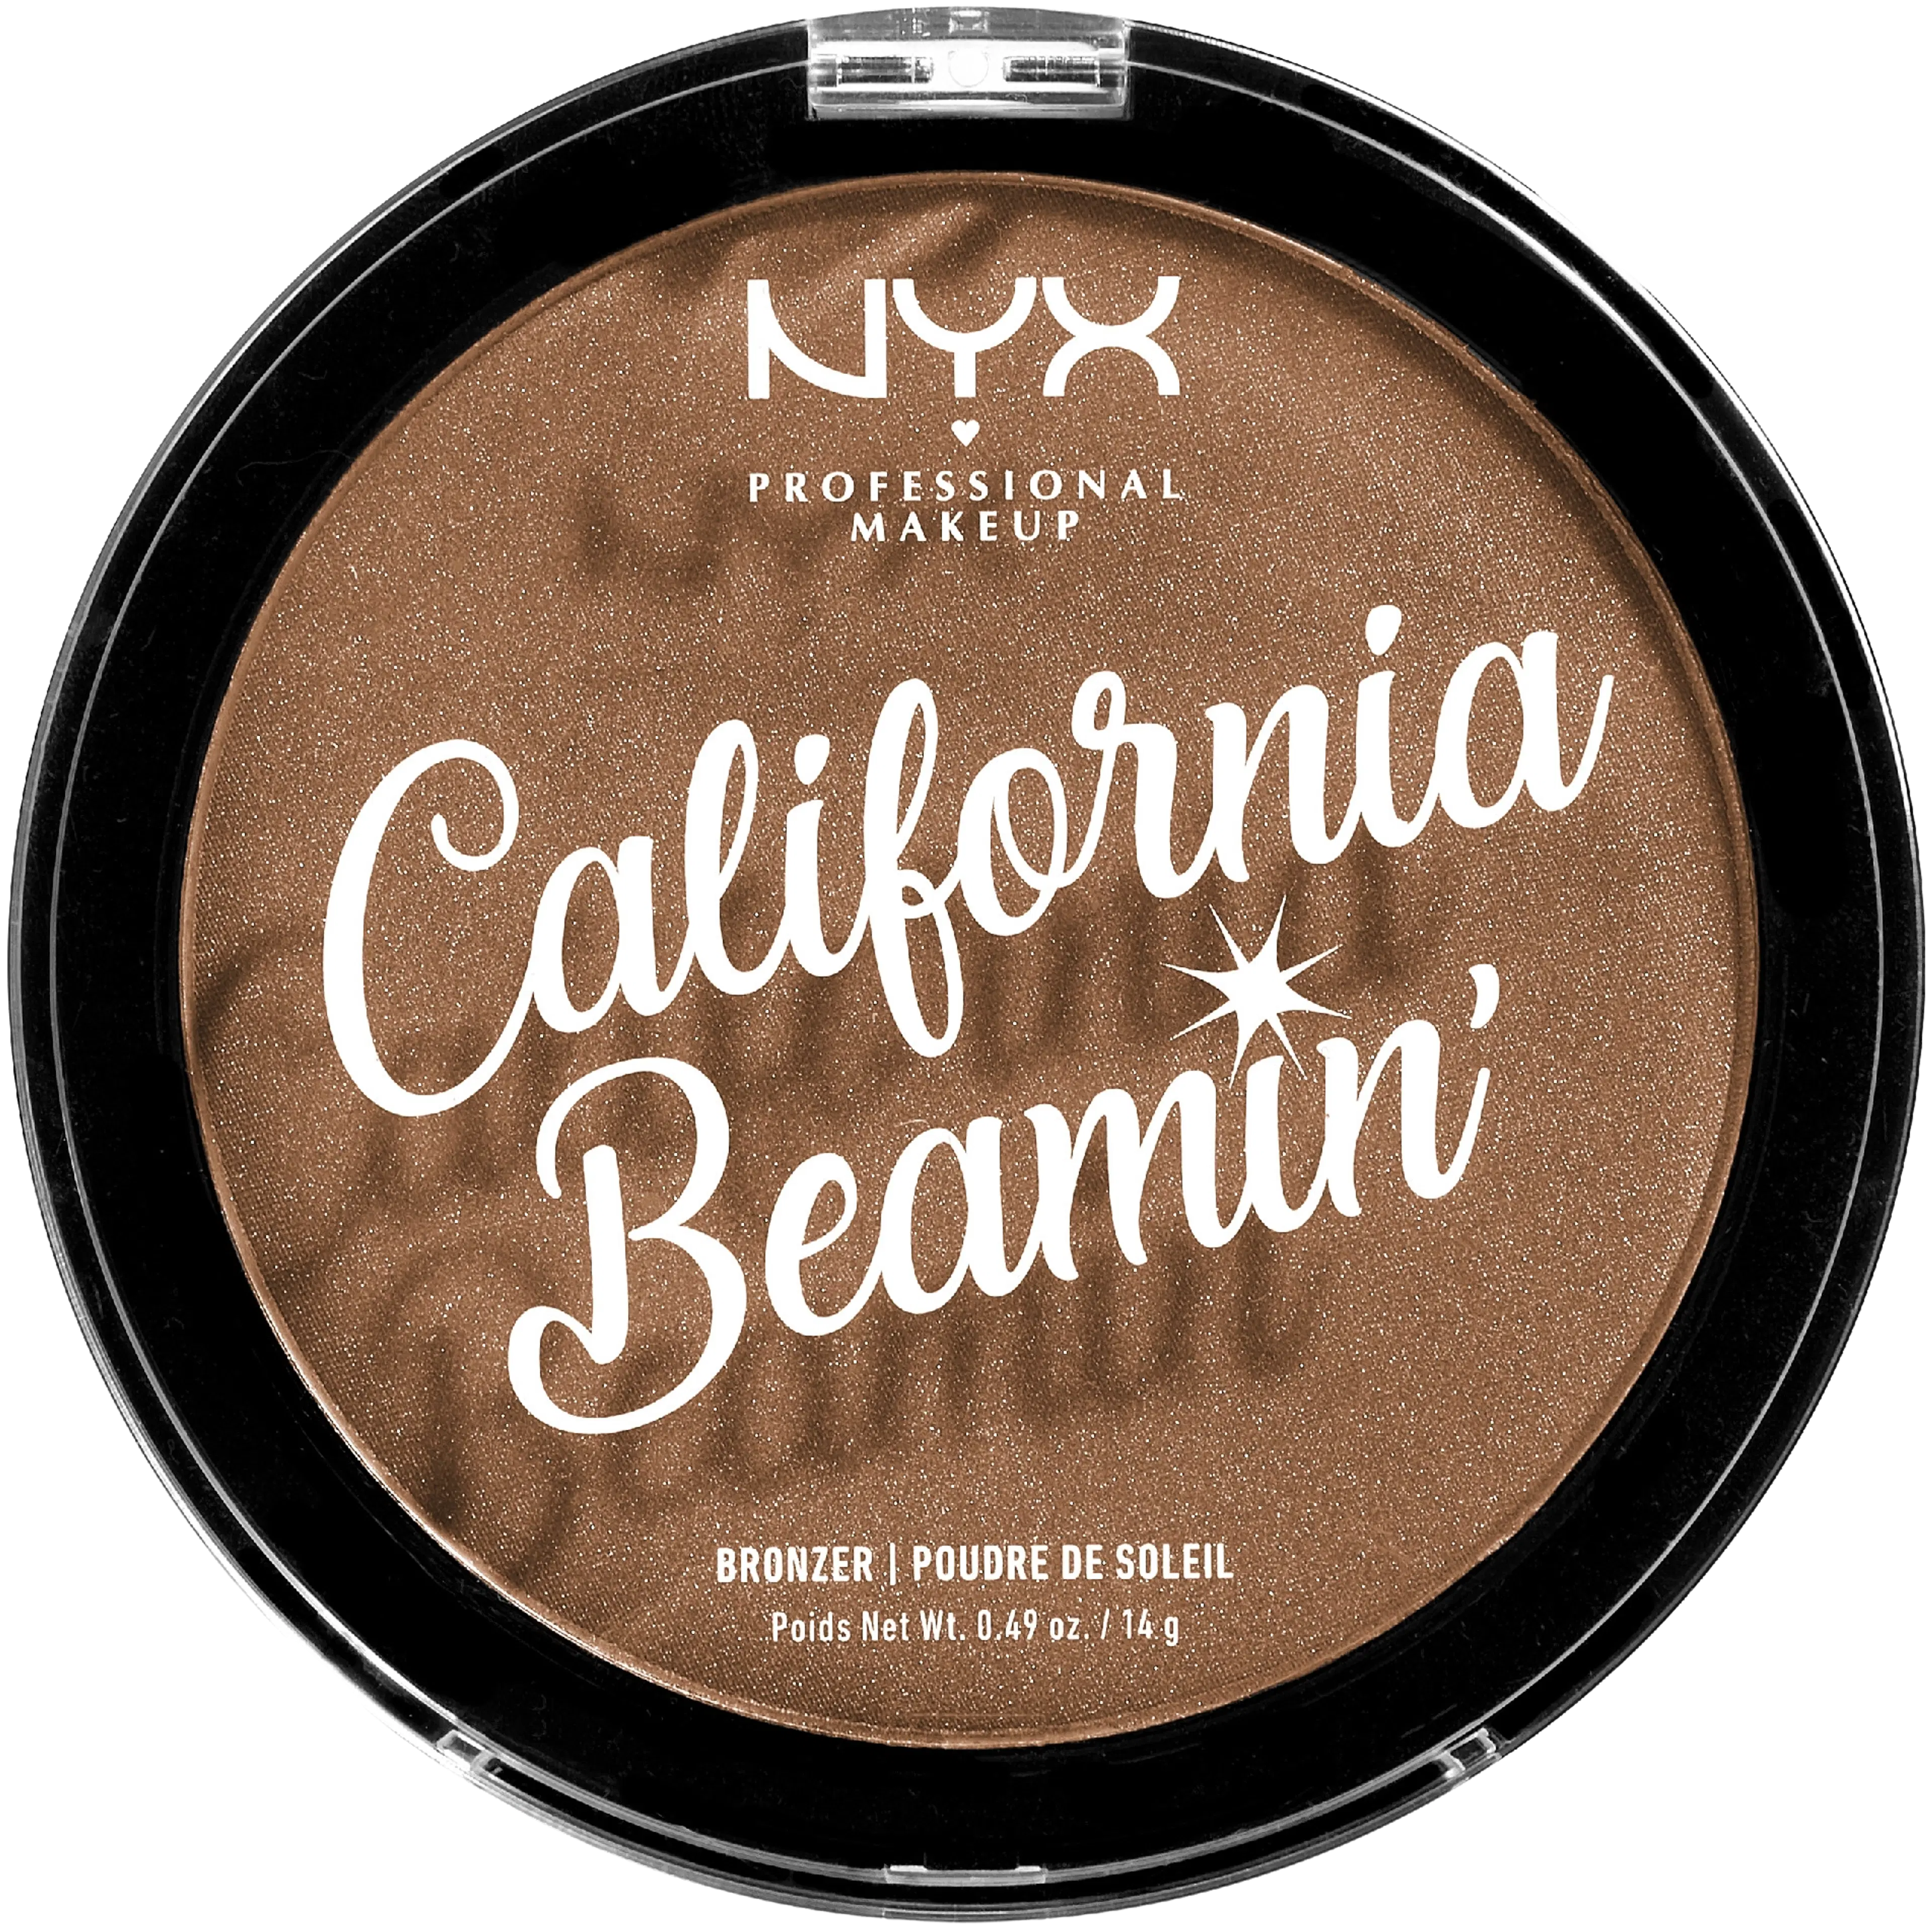 NYX Professional Makeup California Beamin’ Face & Body Bronzer aurinkopuuteri 14g